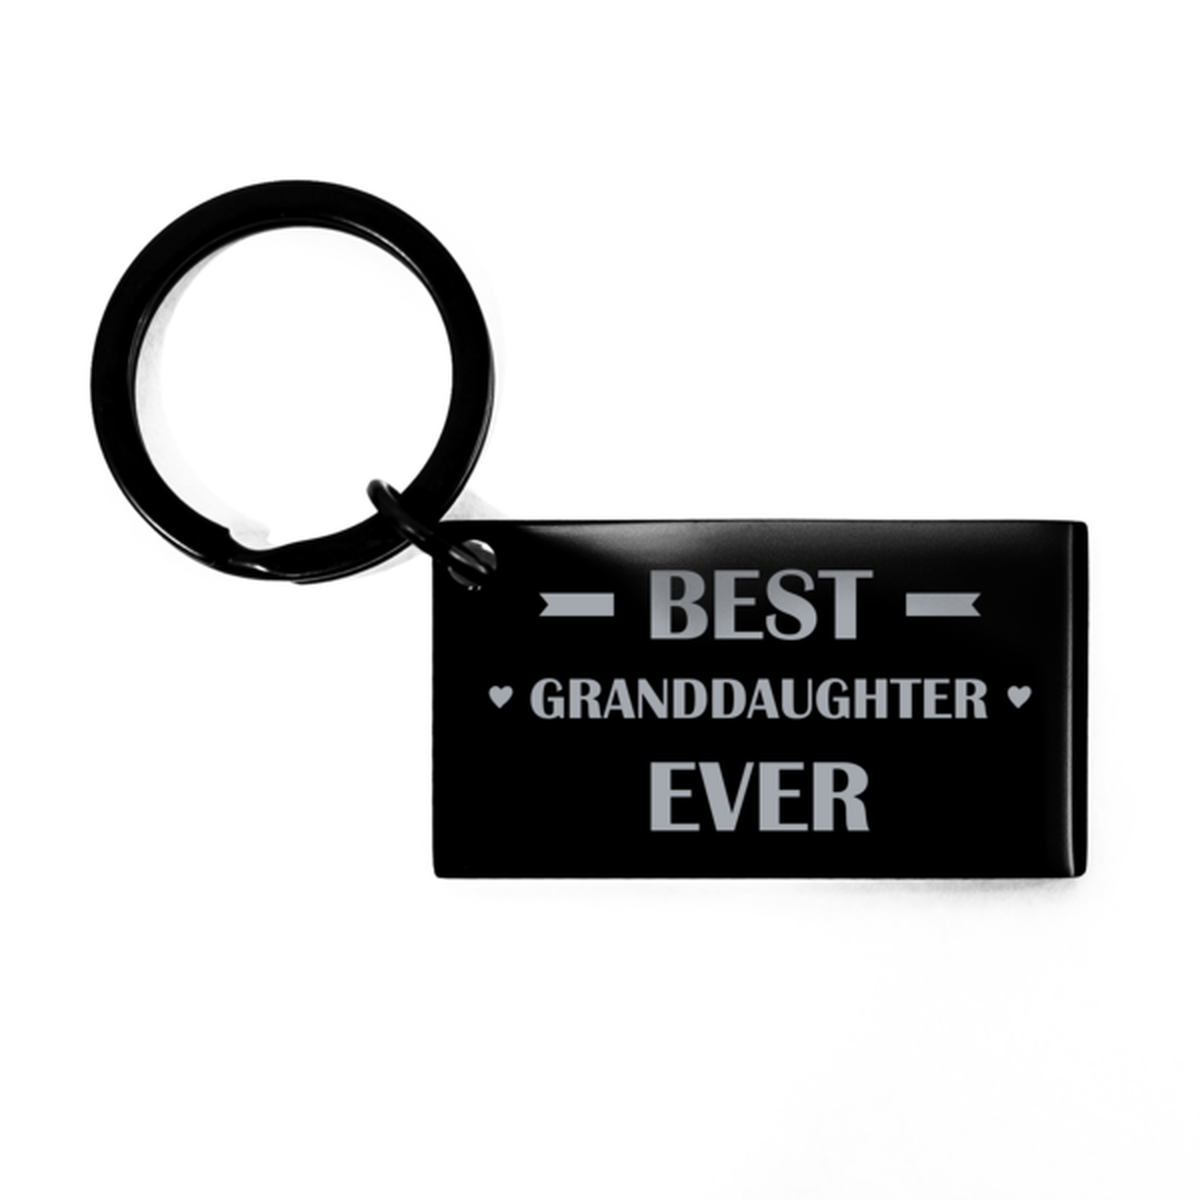 Best Granddaughter Ever Granddaughter Gifts, Funny Black Keychain For Granddaughter, Birthday Engraved Keyring Presents For Women